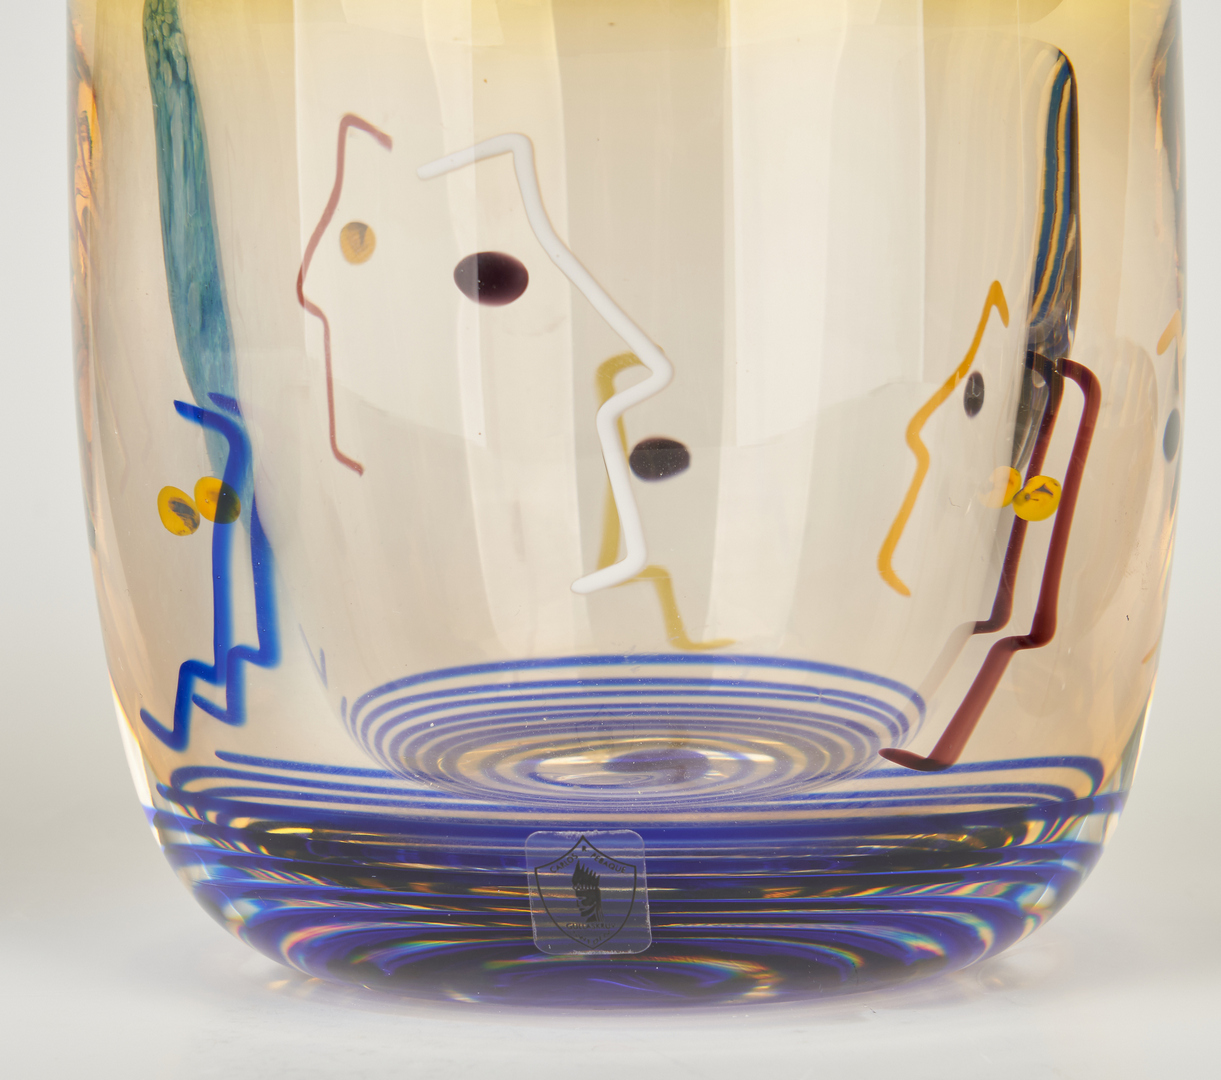 Lot 834: 3 Swedish Art Glass items incl. Orrefors, Kosta Boda